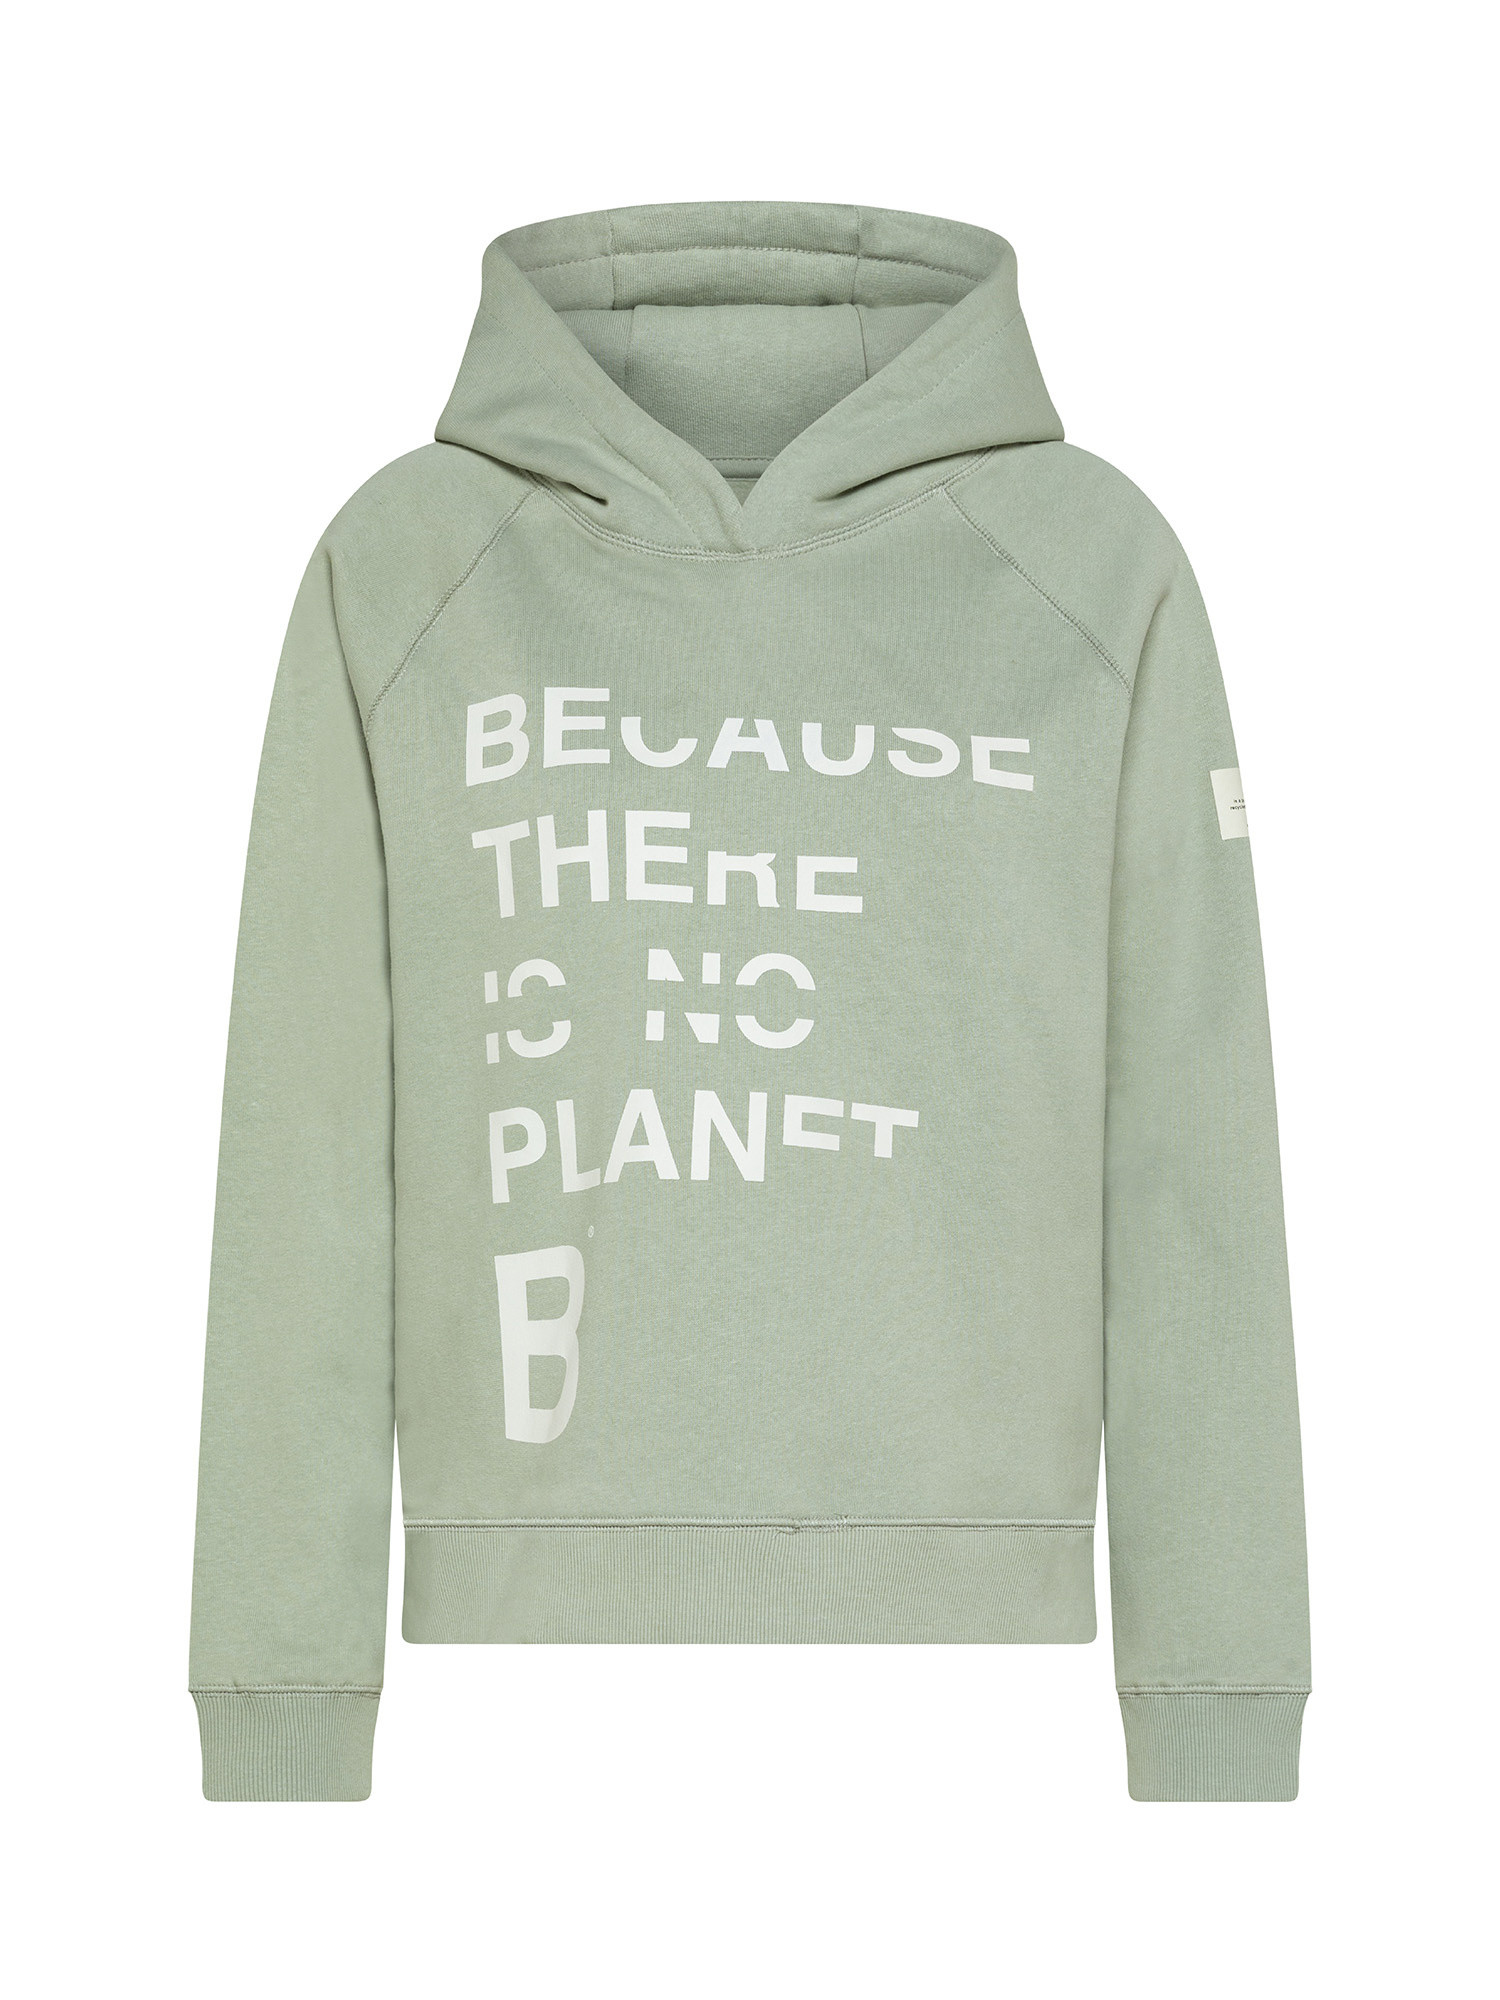 Ecoalf - Plin sweatshirt with print, Light Green, large image number 0